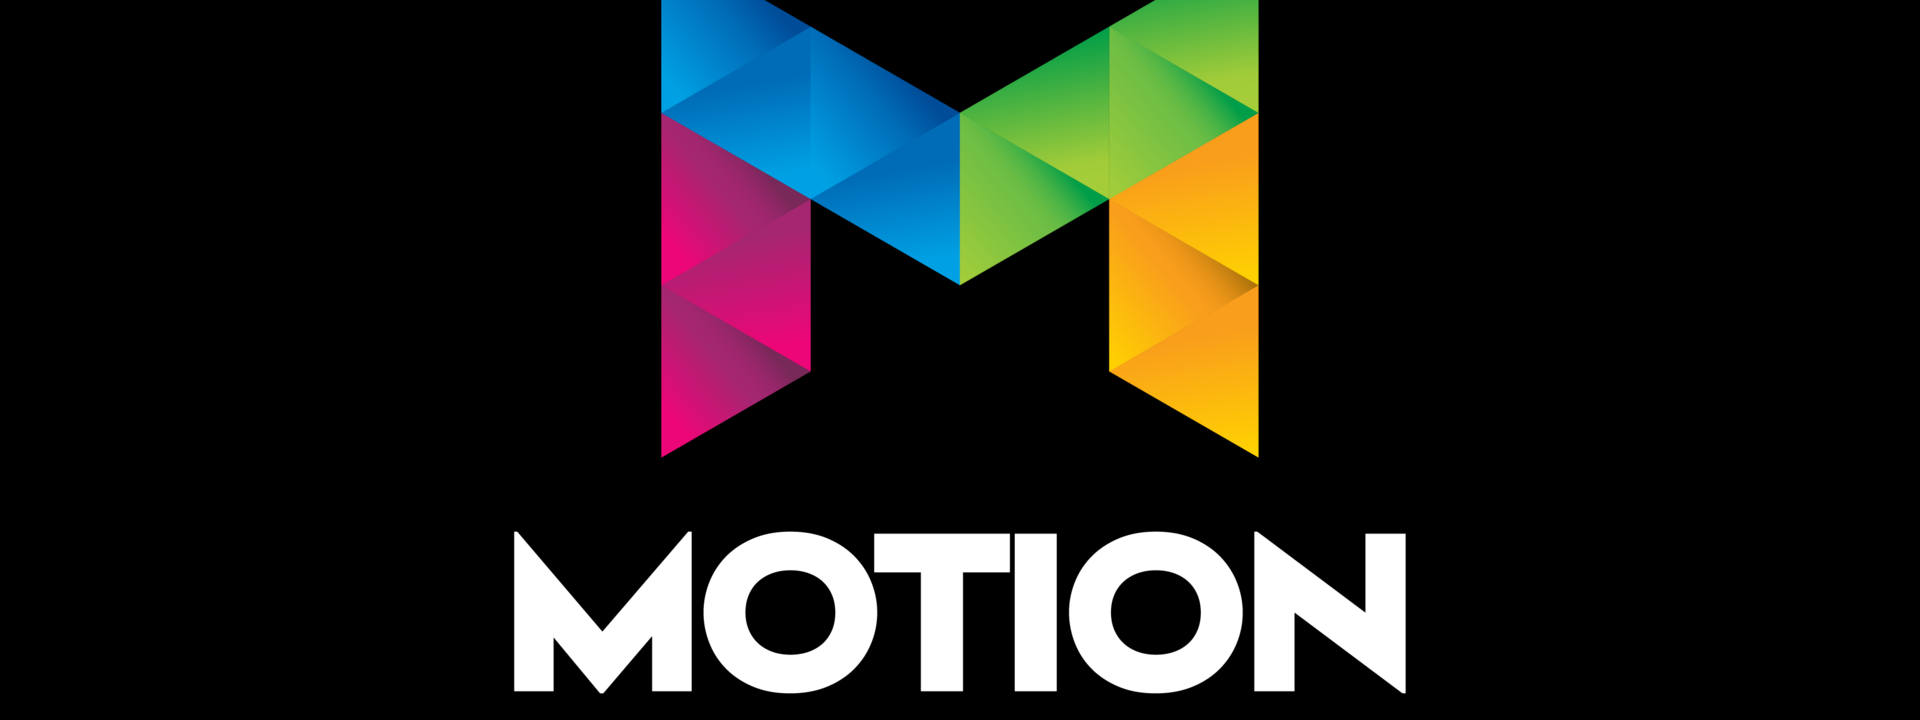 motion-logo-phone-grip.png